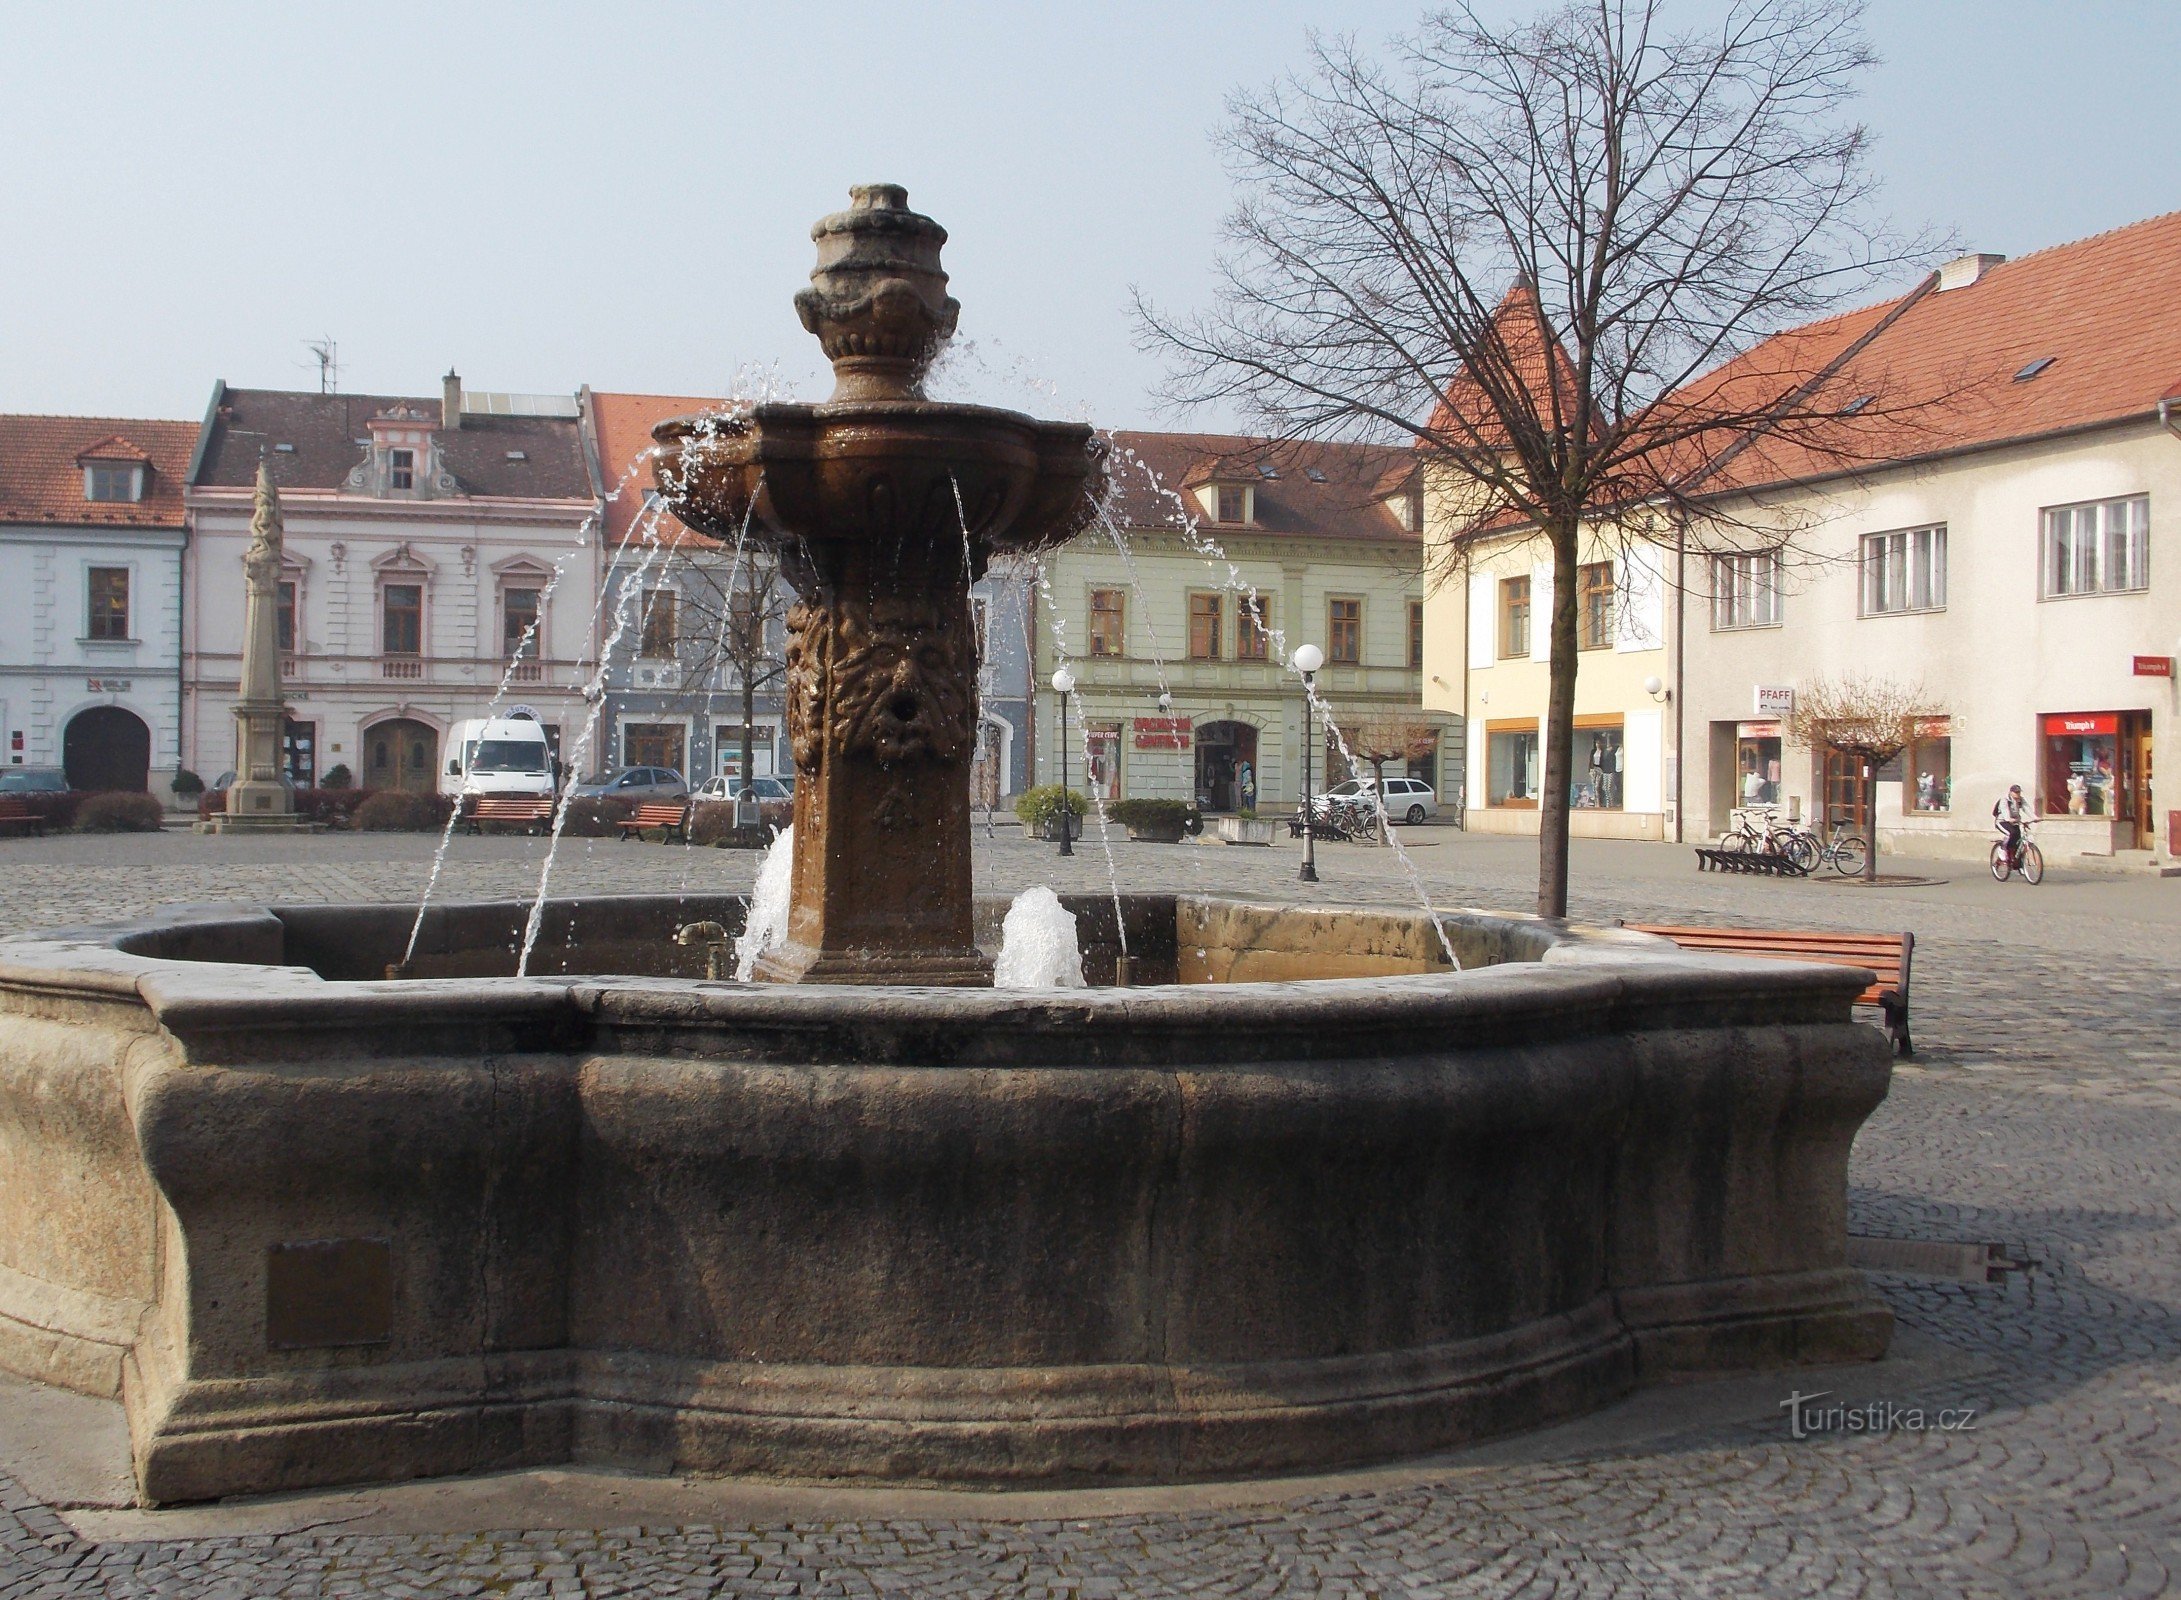 Veranderingen in de stad Uherské Hradiště